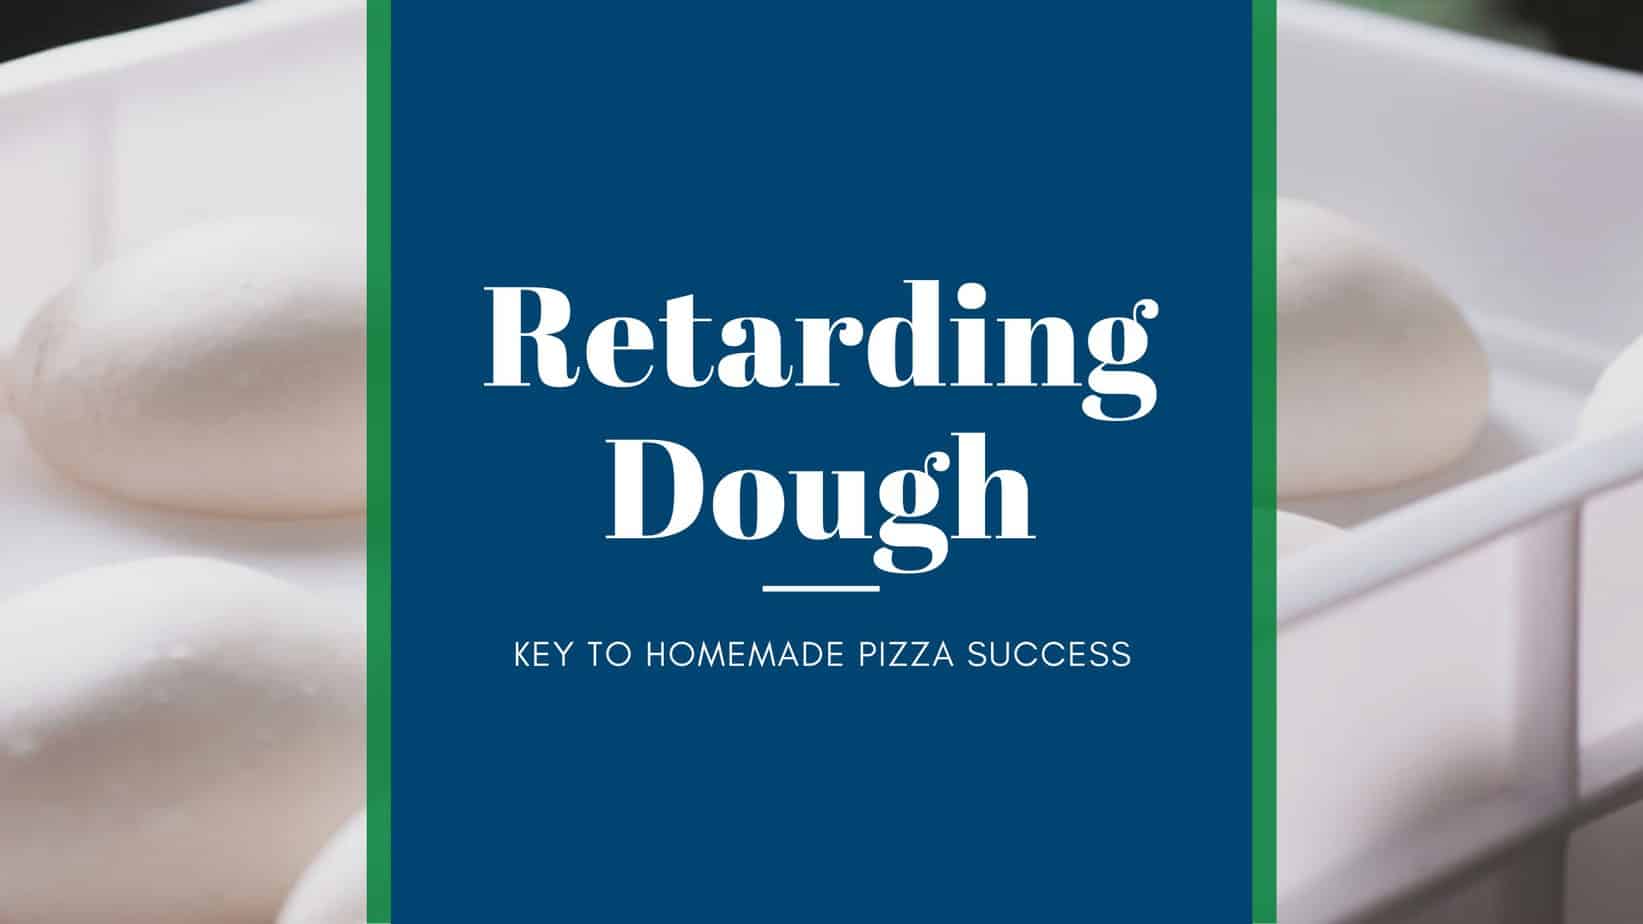 retarding dough image